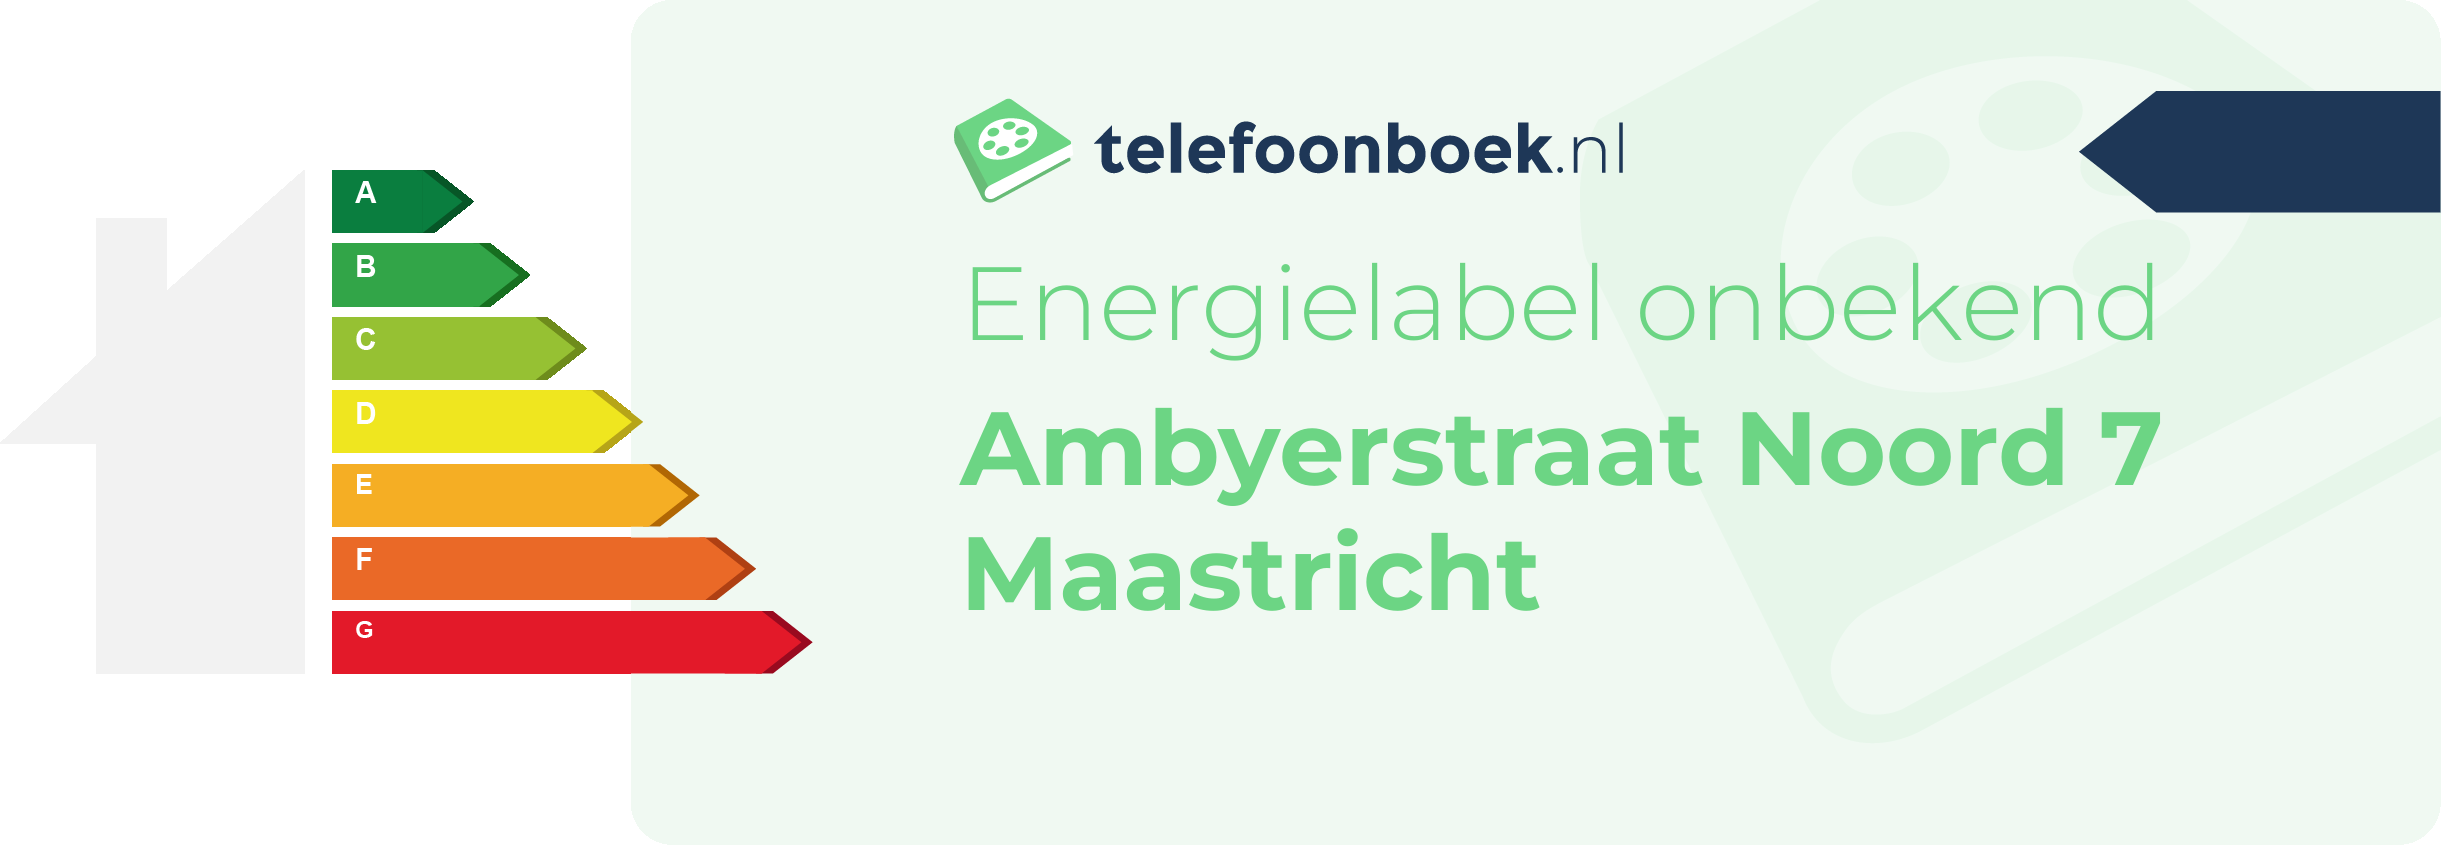 Energielabel Ambyerstraat Noord 7 Maastricht